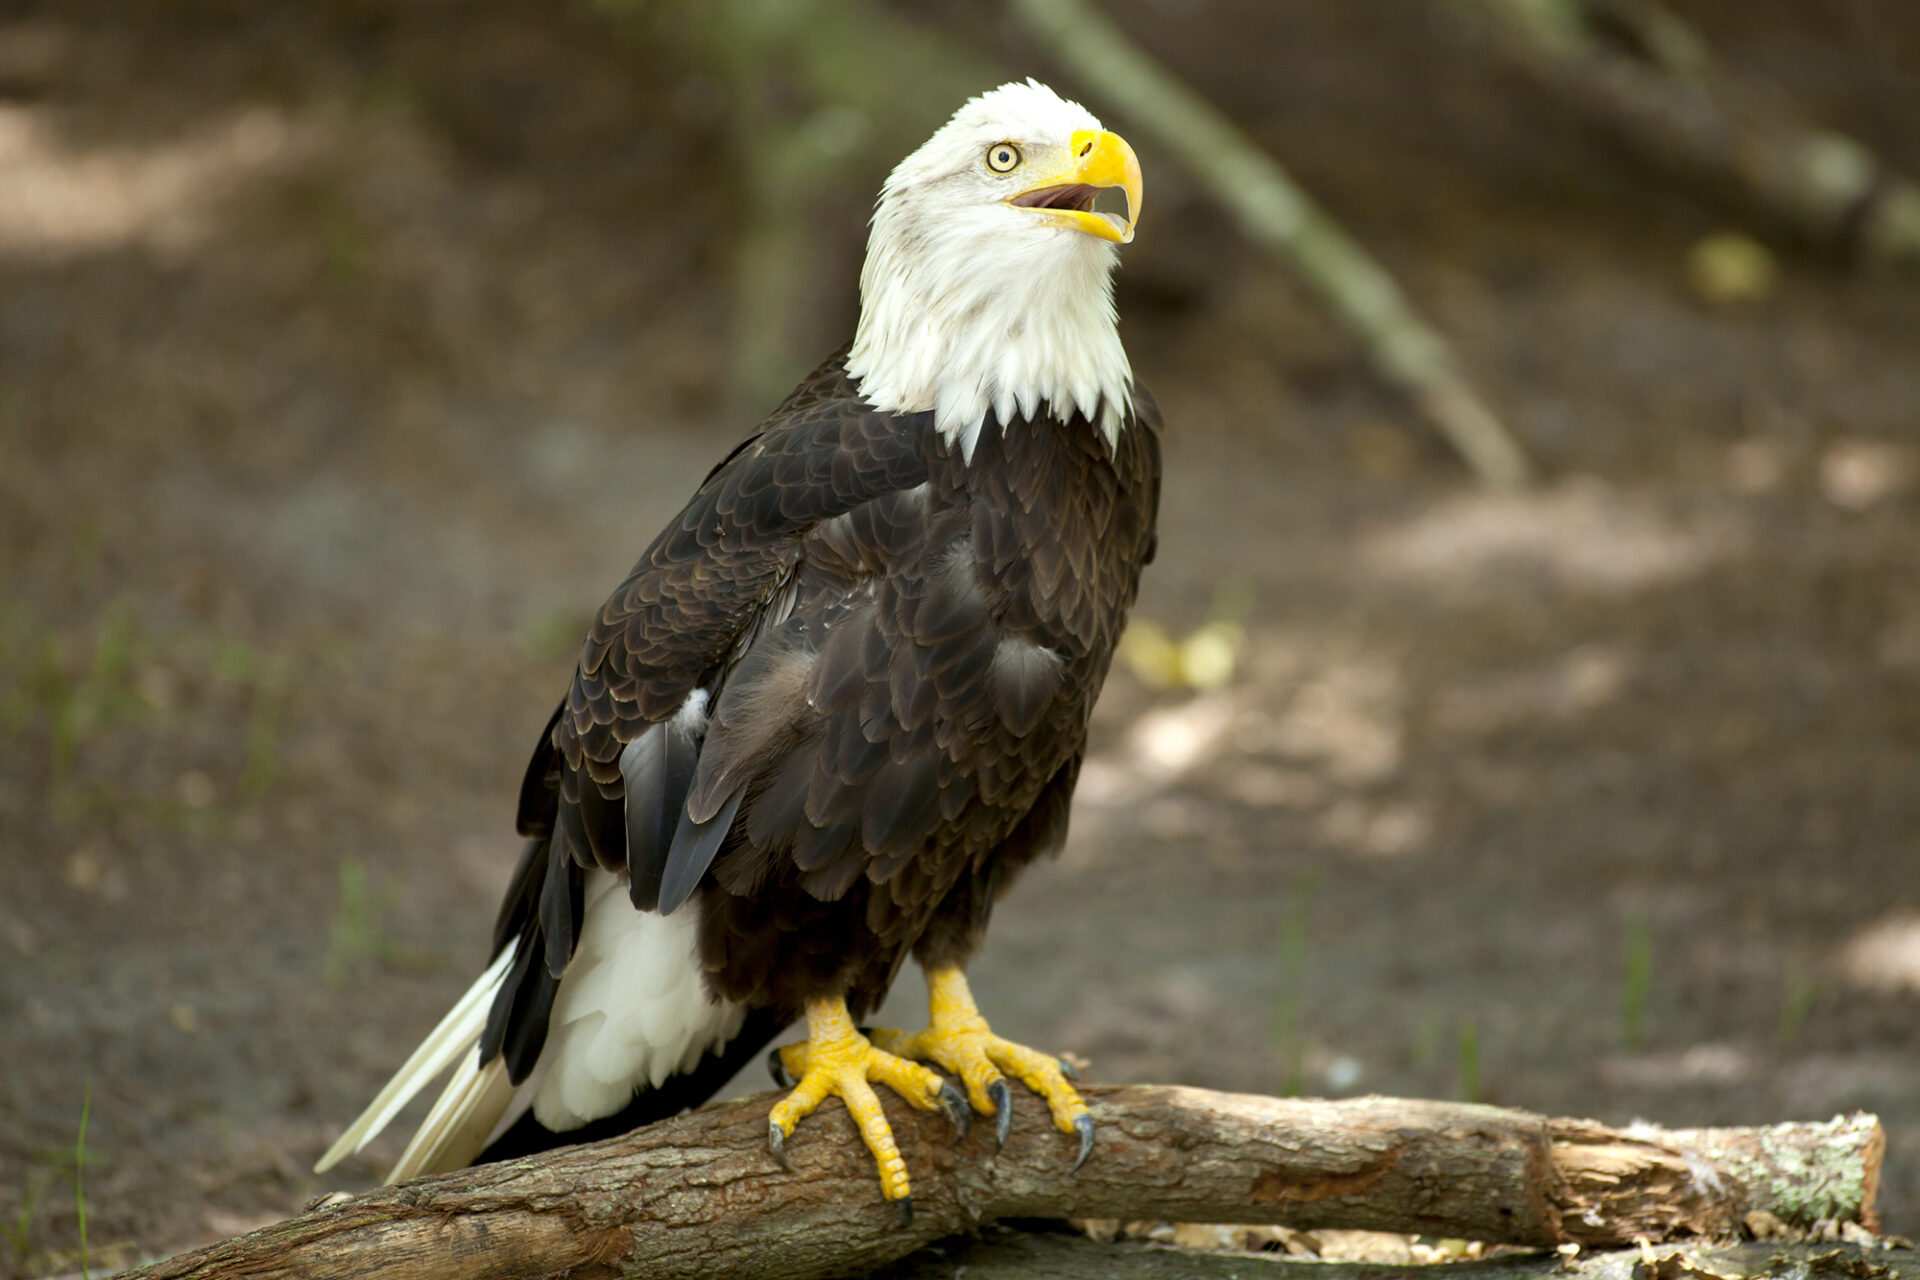 Bald eagle found dead after neighbor reports gunshot, Missouri officials say